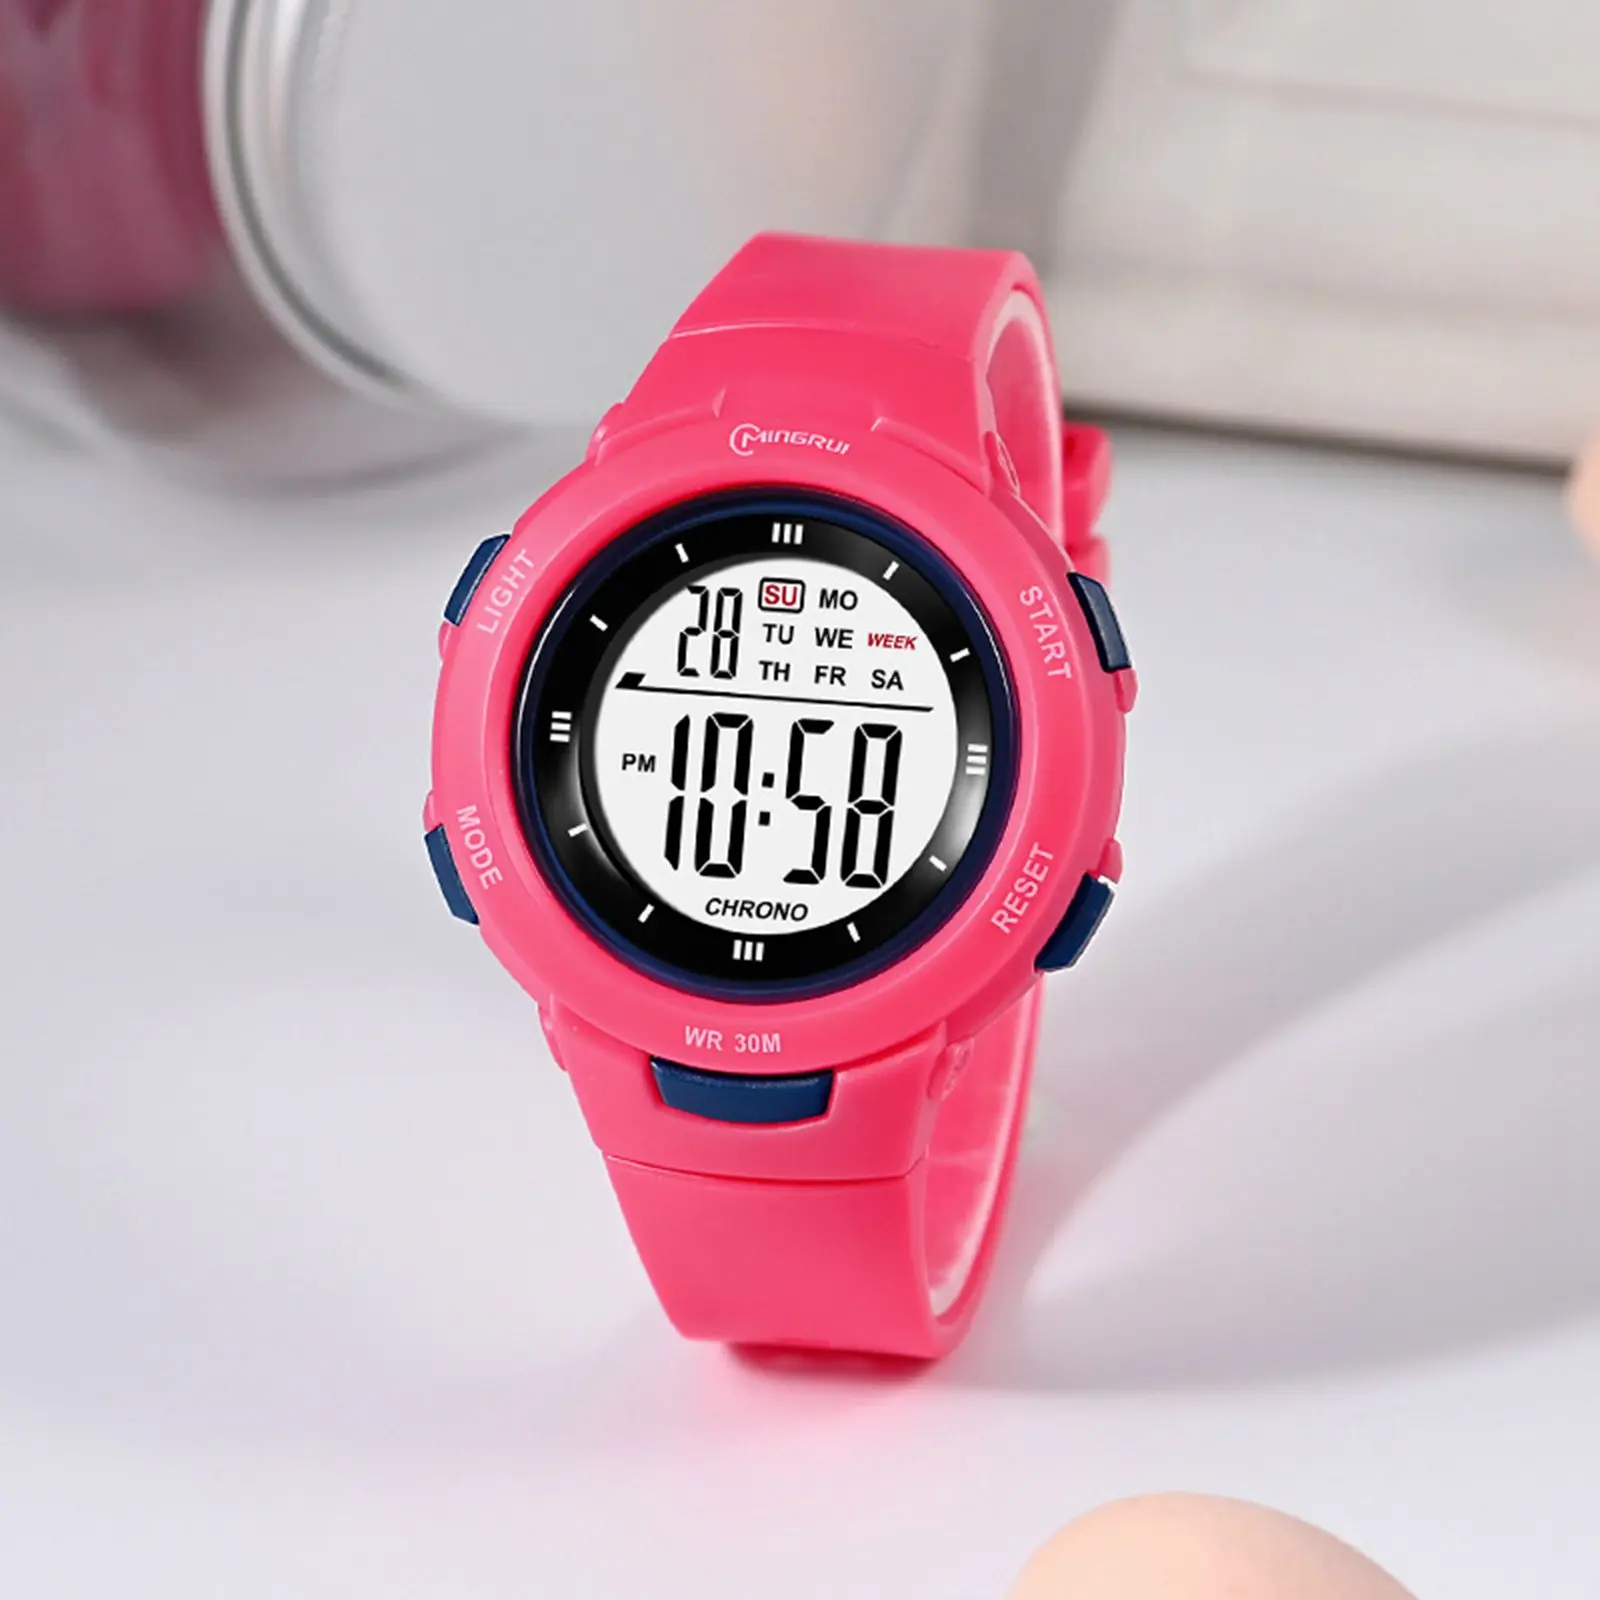 Boys Girls Sport Digital Watch Waterproof Electronic Watches Wrist Watch with Alarm Stopwatch Calendar EL Light for Kids